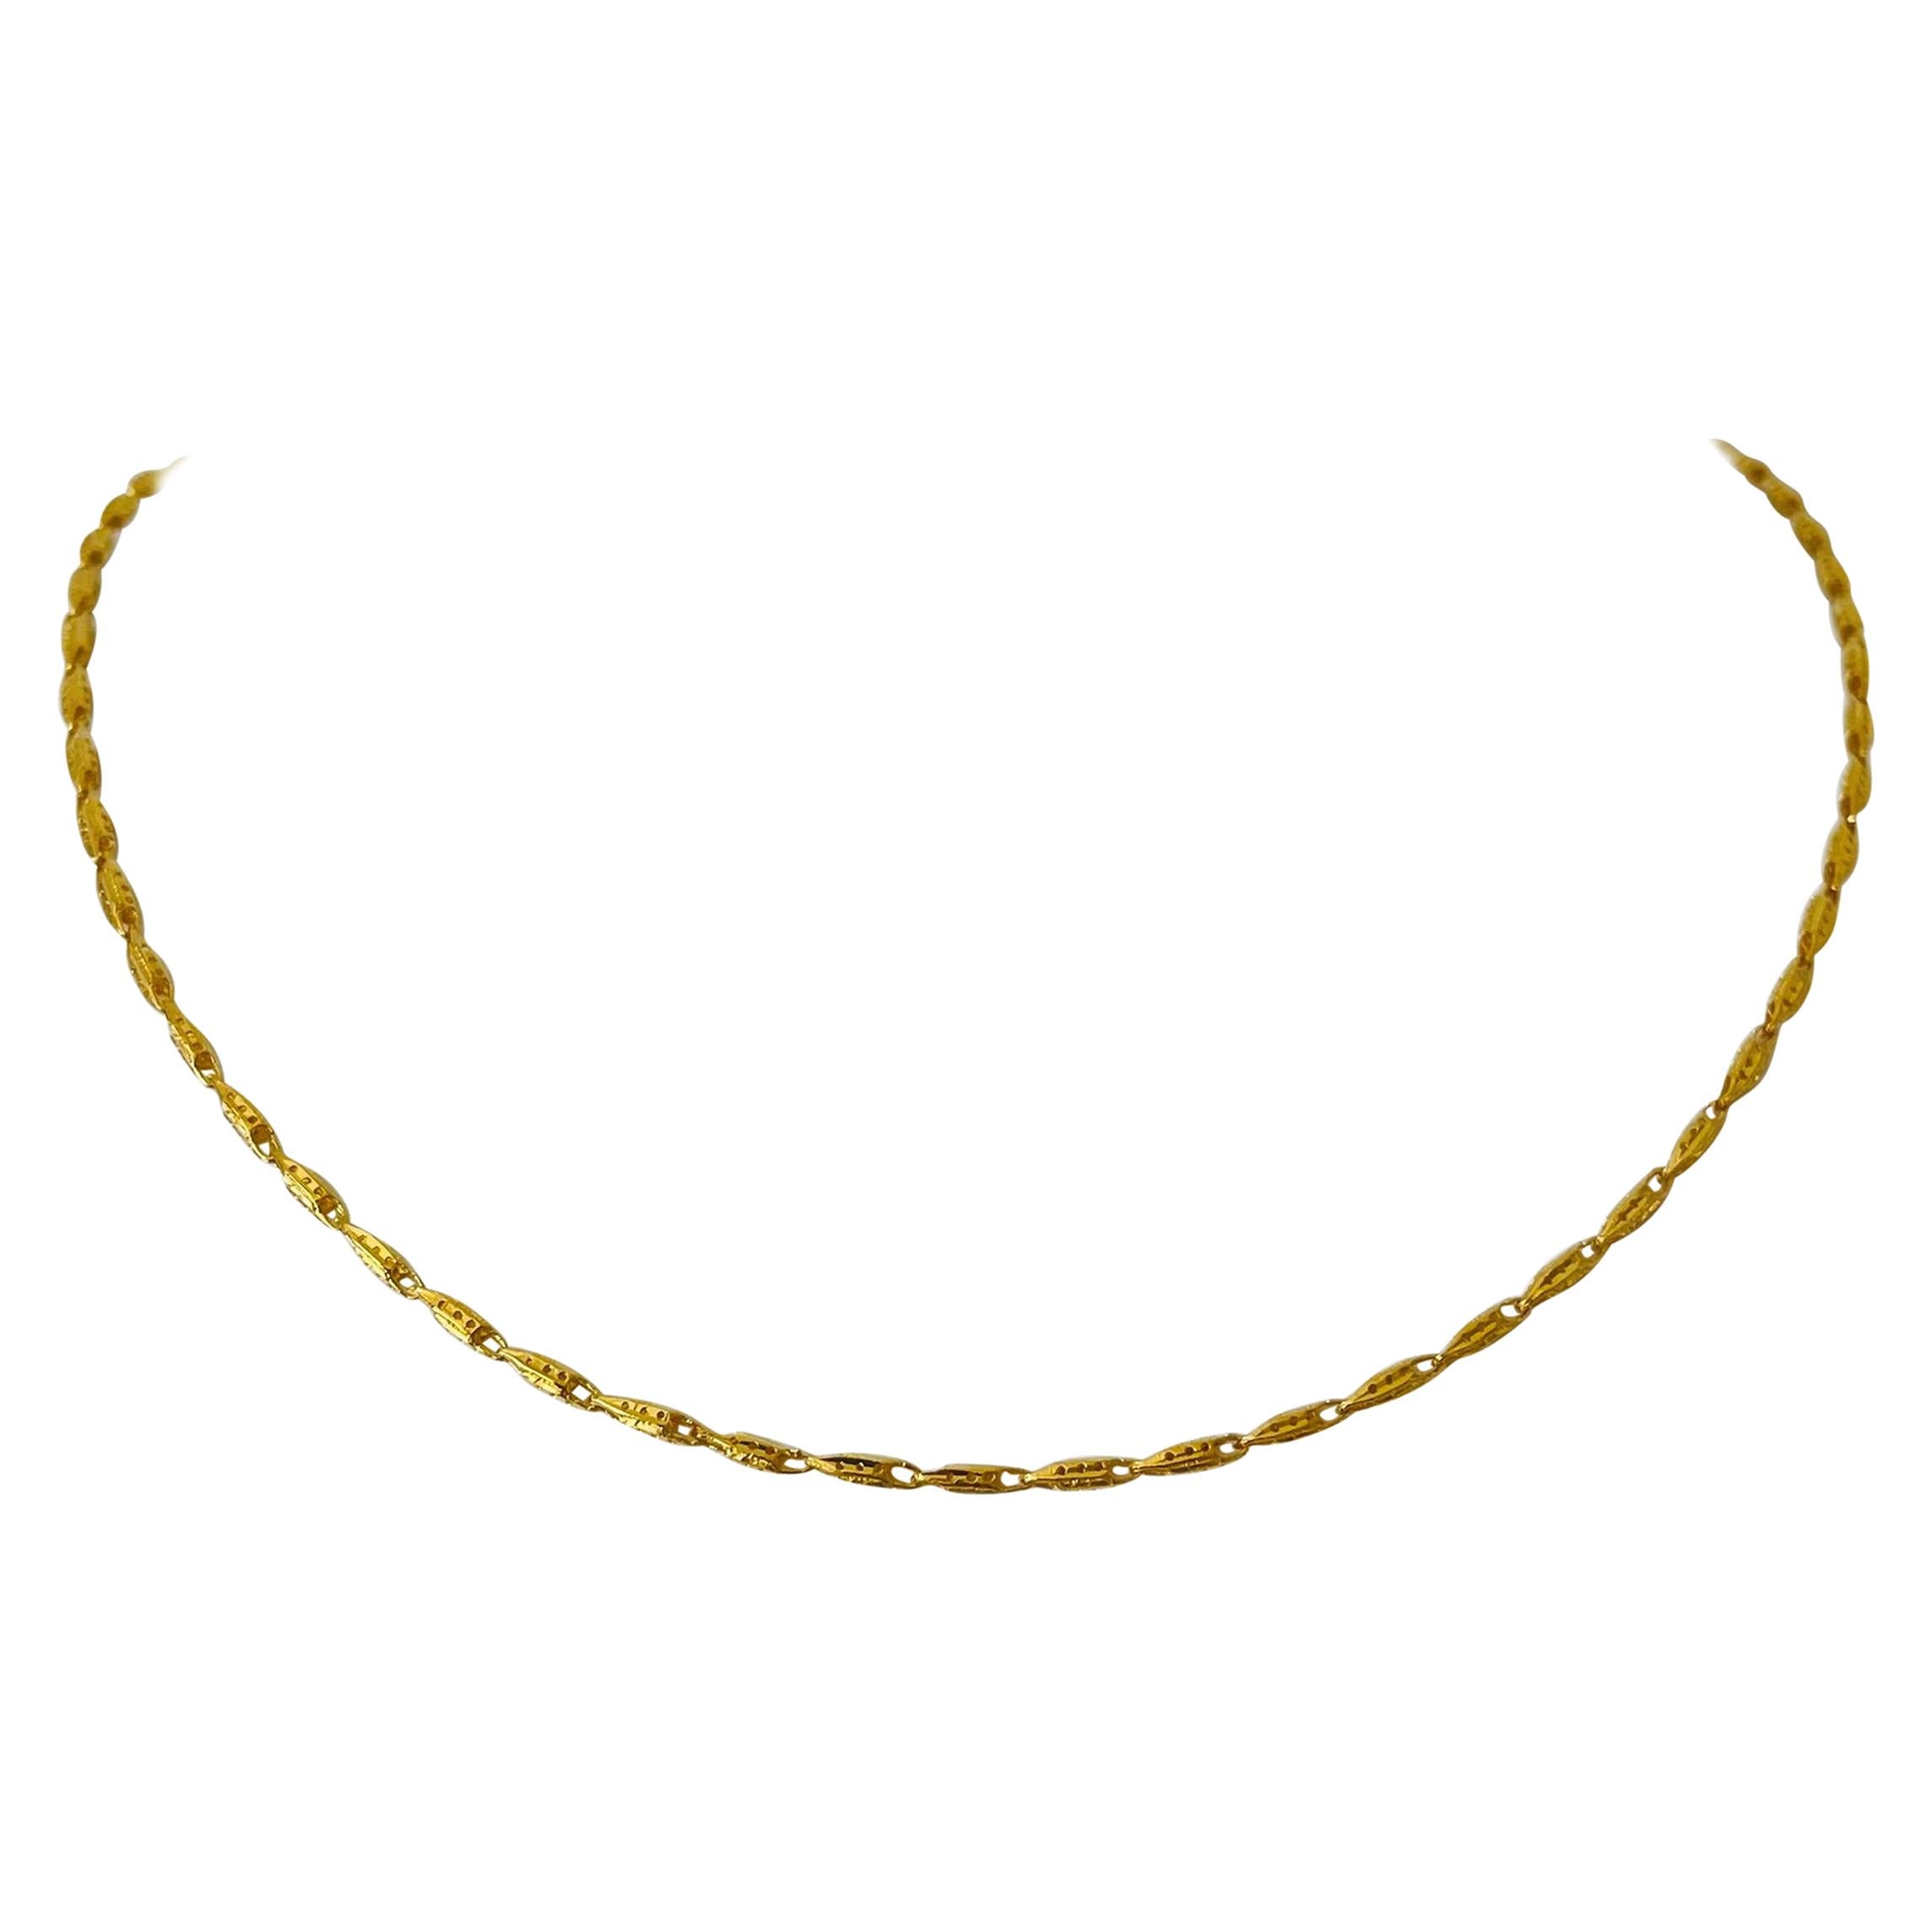 24 Karat Pure Yellow Gold Ladies Fancy Open Link Chain Necklace